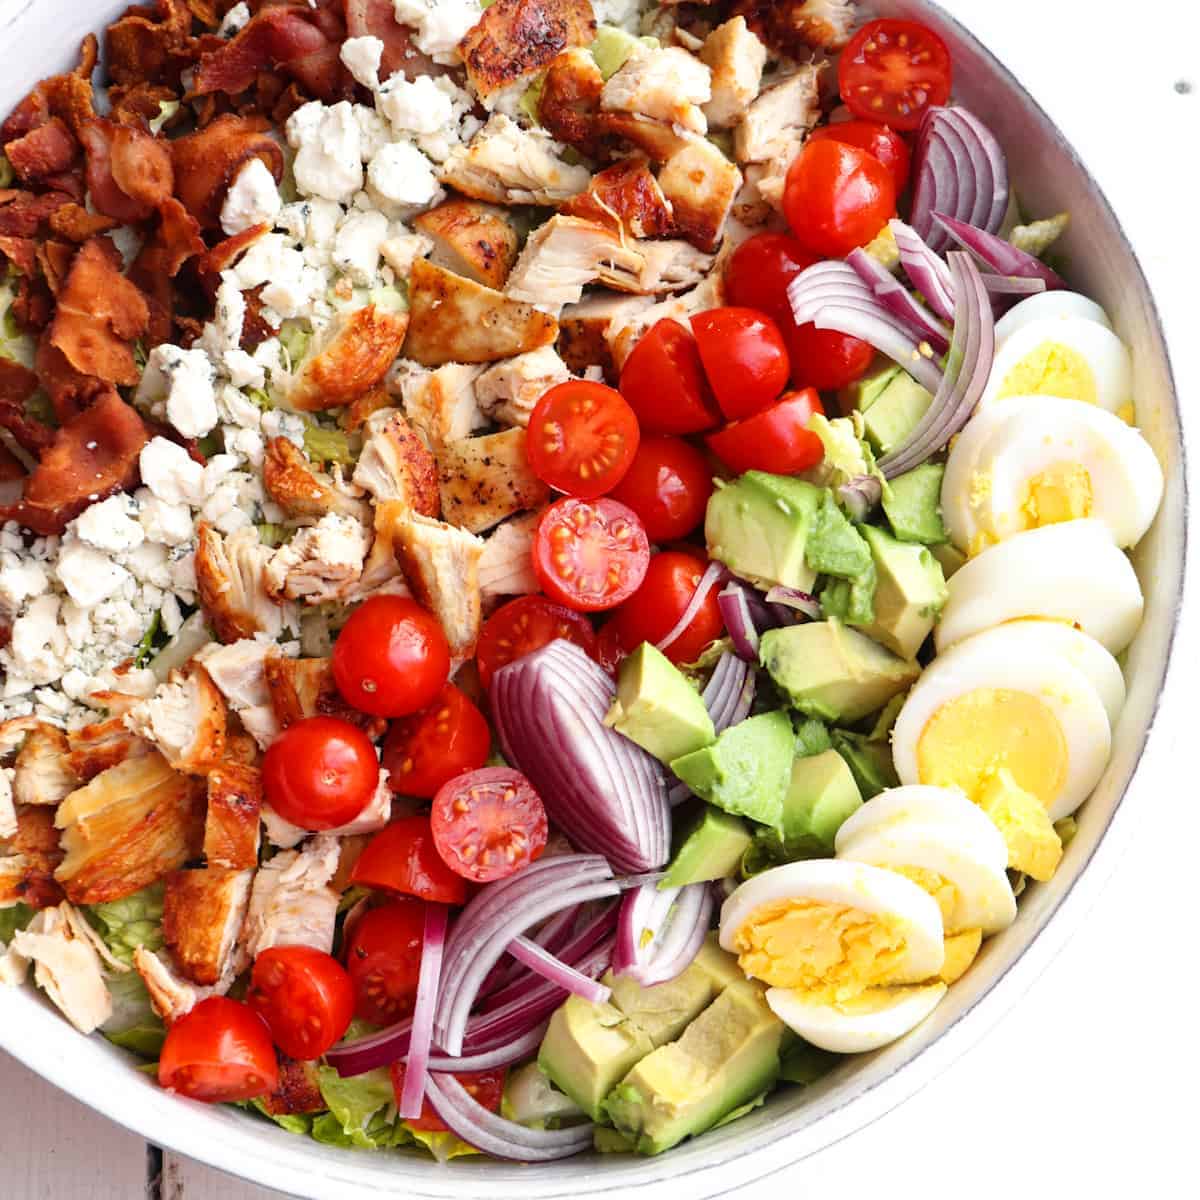 chicken cobb salad arranged in a circular platter